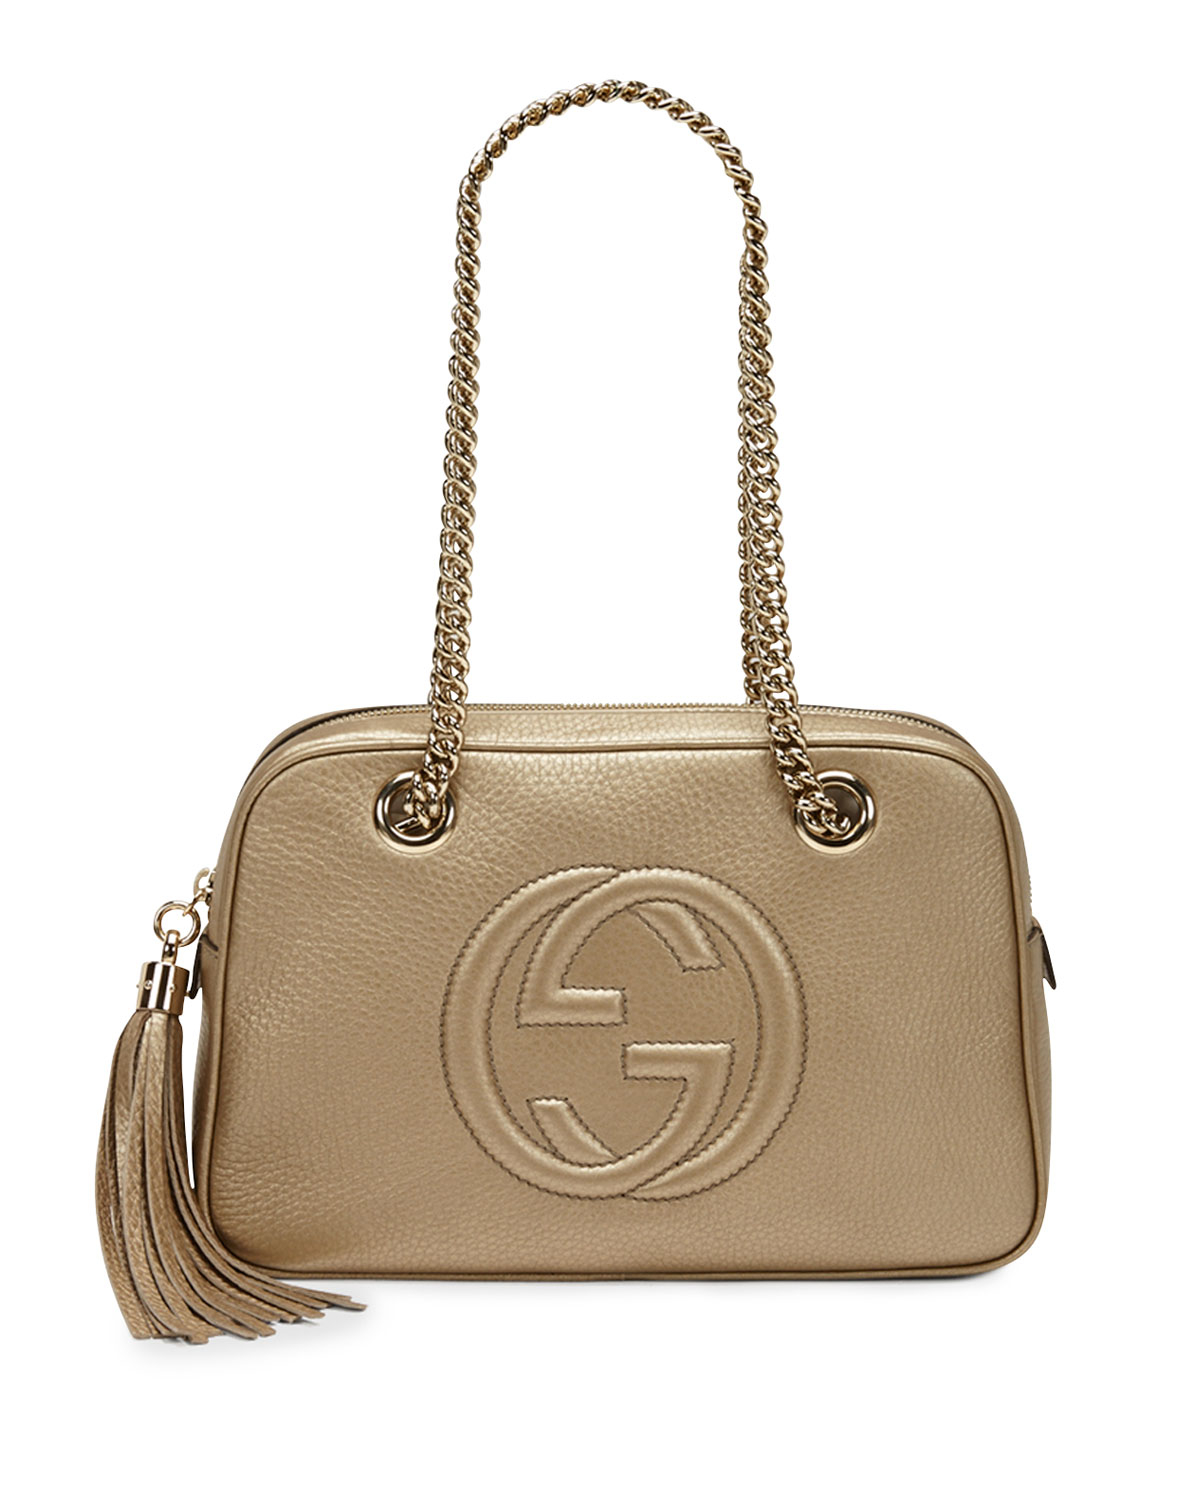 Gucci Soho Metallic Leather Shoulder Bag in Beige (CHAMPAGNE) | Lyst